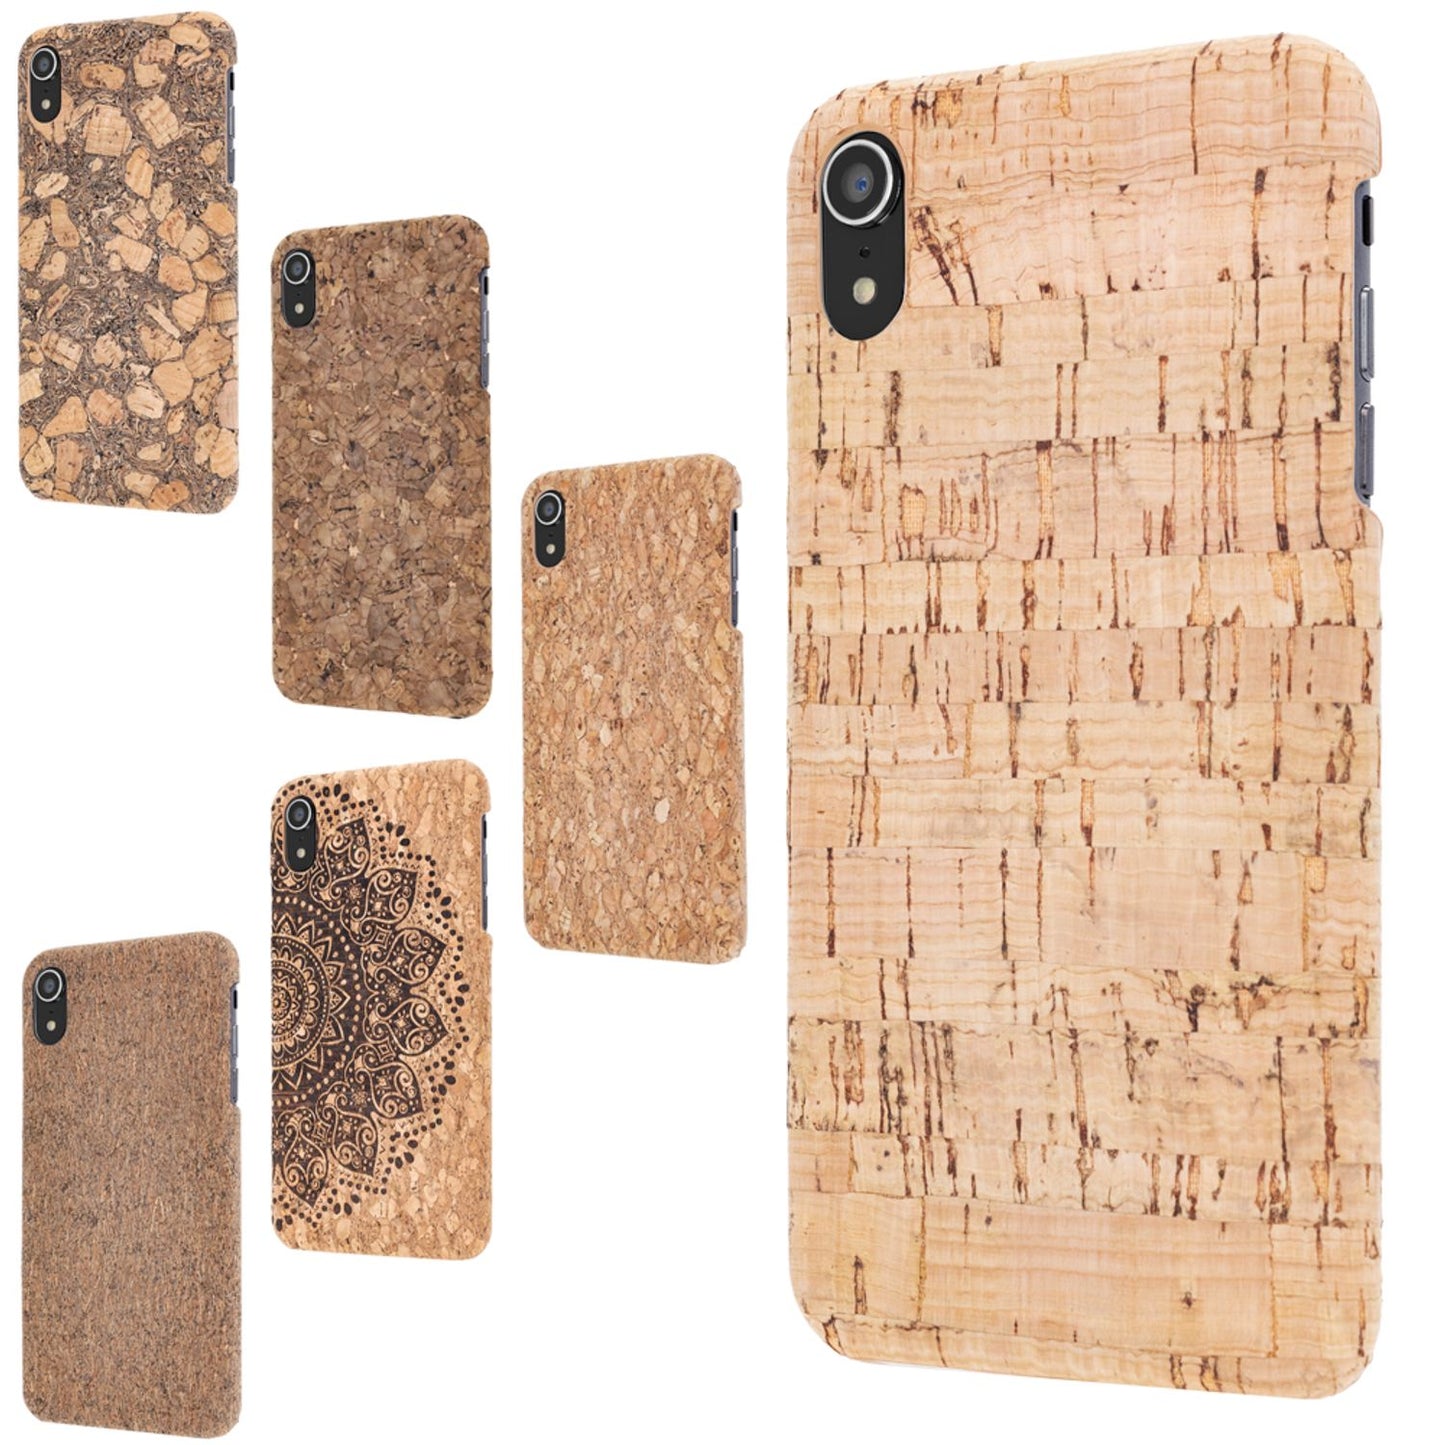 NALIA Kork Hülle für iPhone XR, Handyhülle Natur Holz Look Handy Tasche Cover